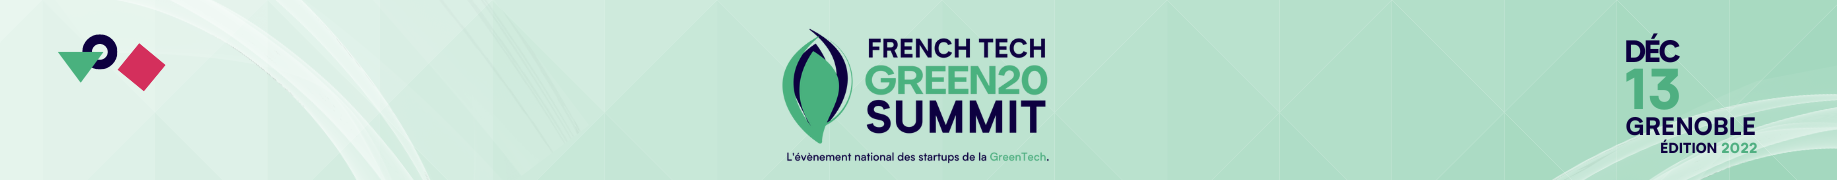 French Tech Green20 Summit